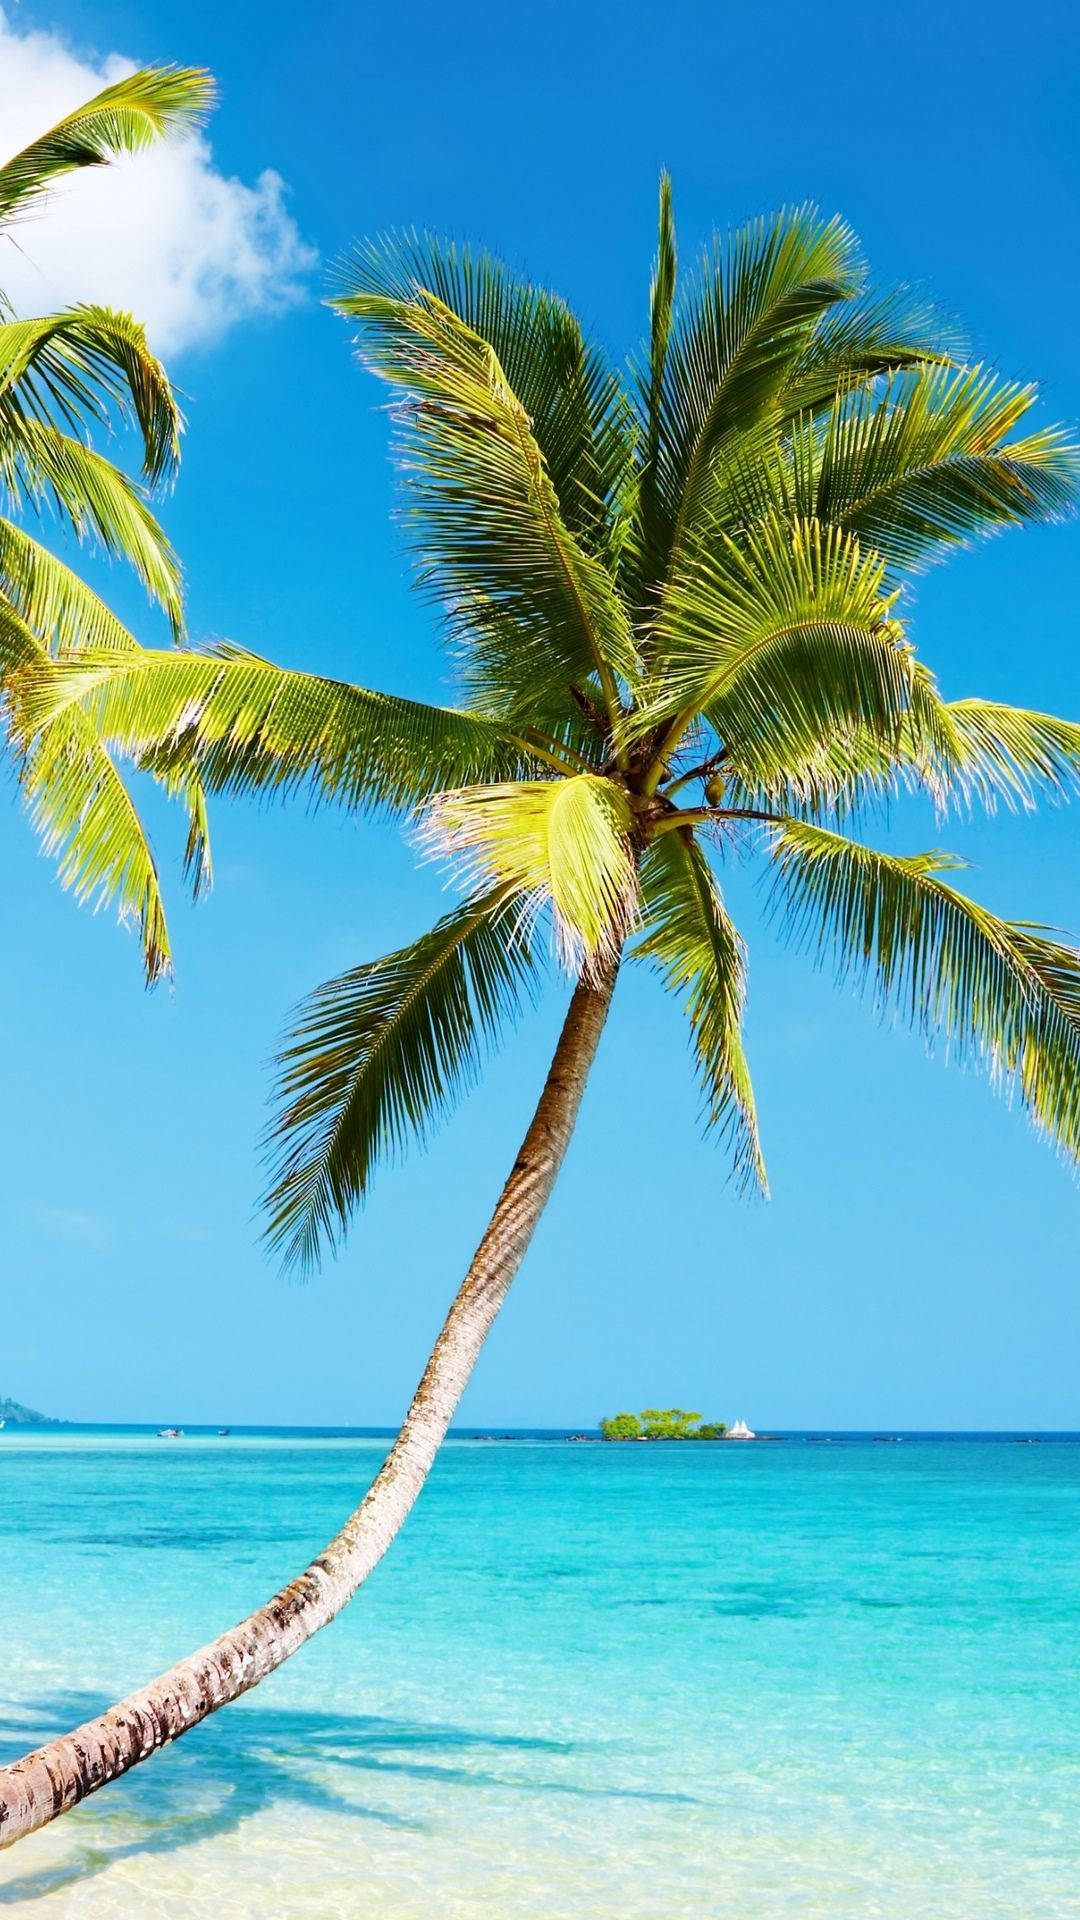 4k Iphone Bent Coconut Tree On Beach